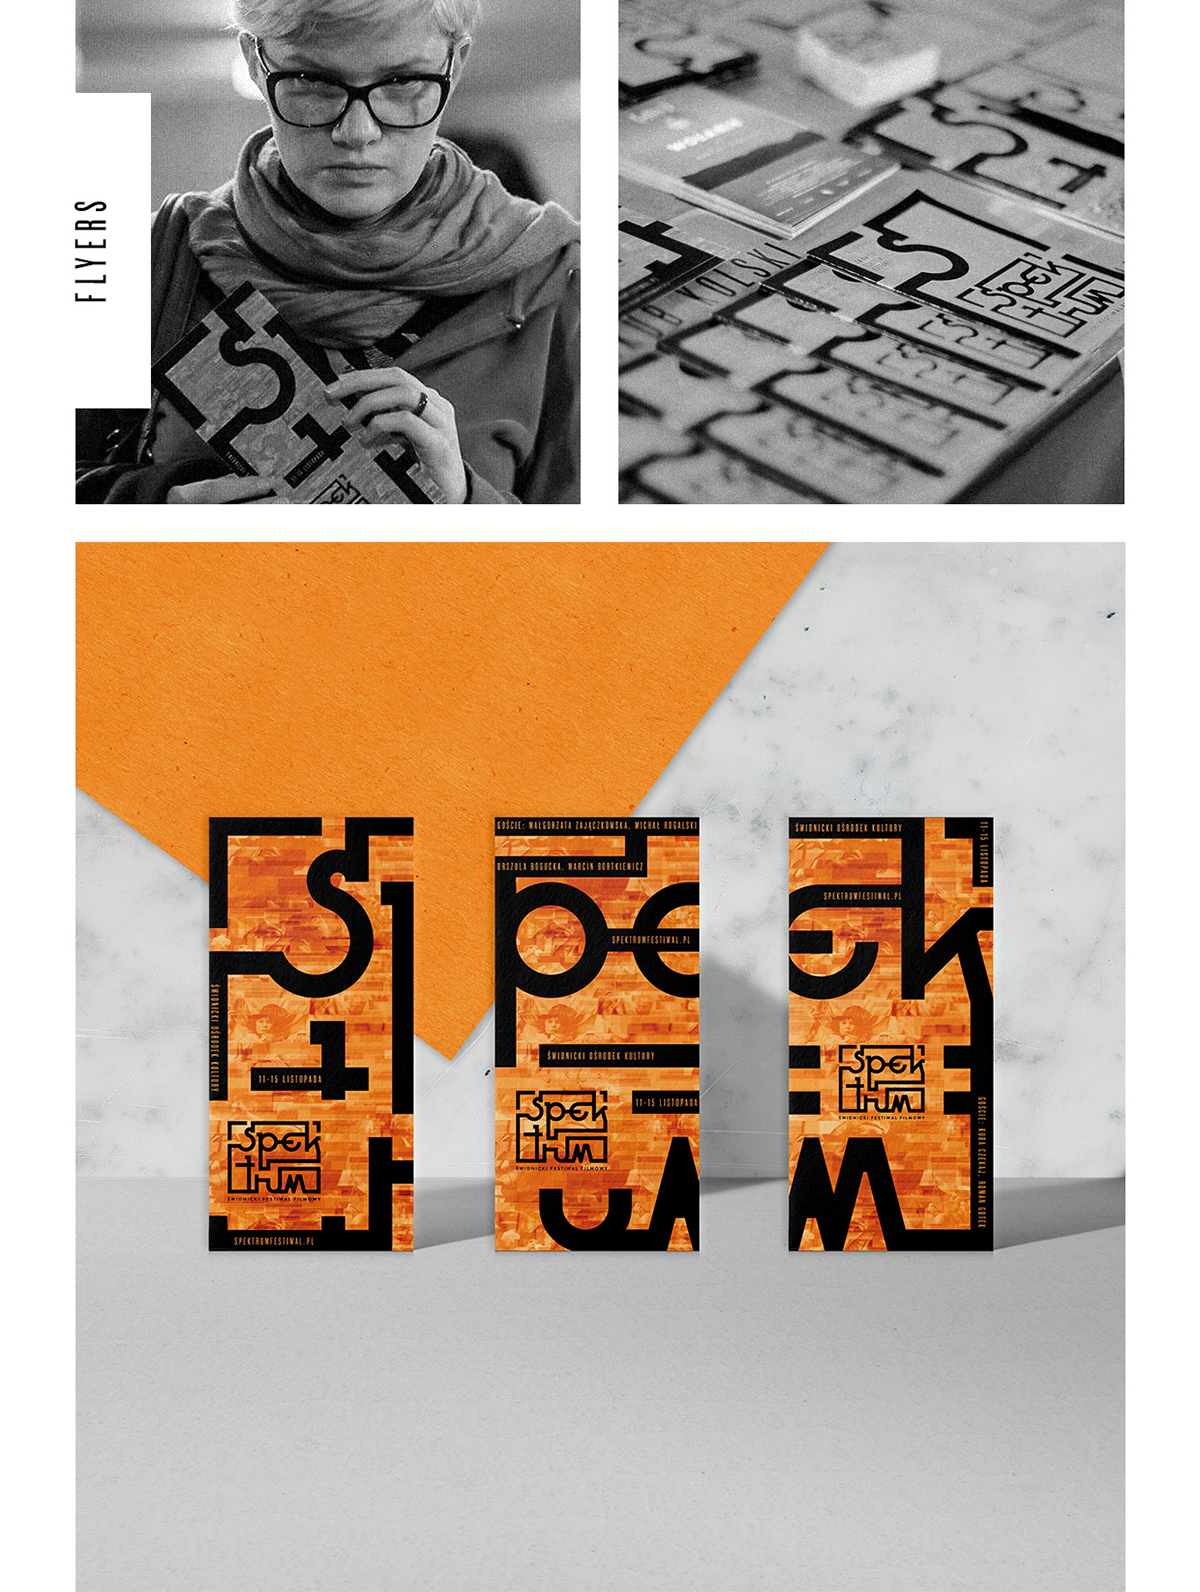 film festival festival spectre Logotype logo typo orange movie poland sign poster geometric pattern free Theatre